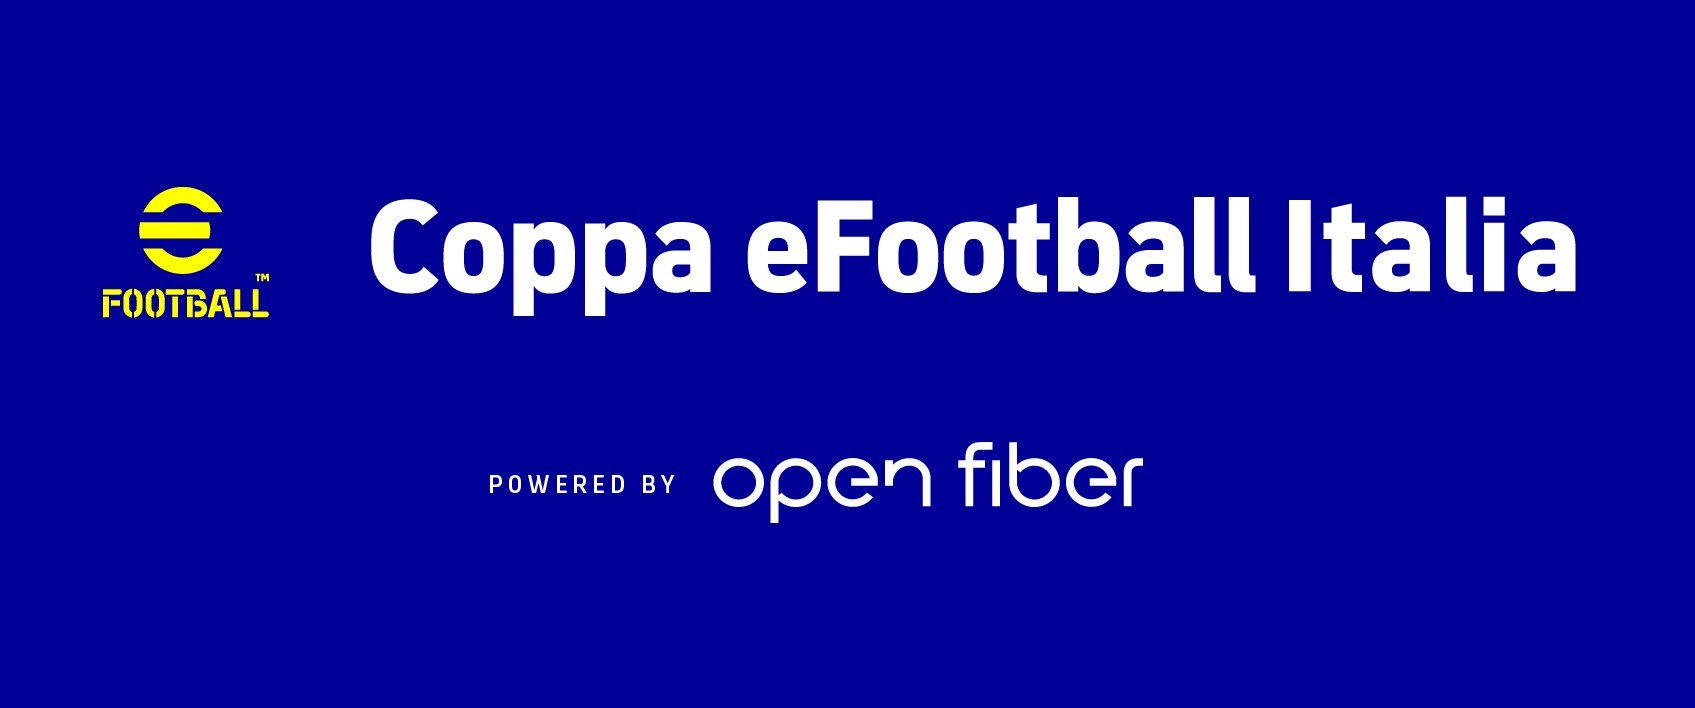 Coppa eFootball Italia - confermati i sette team